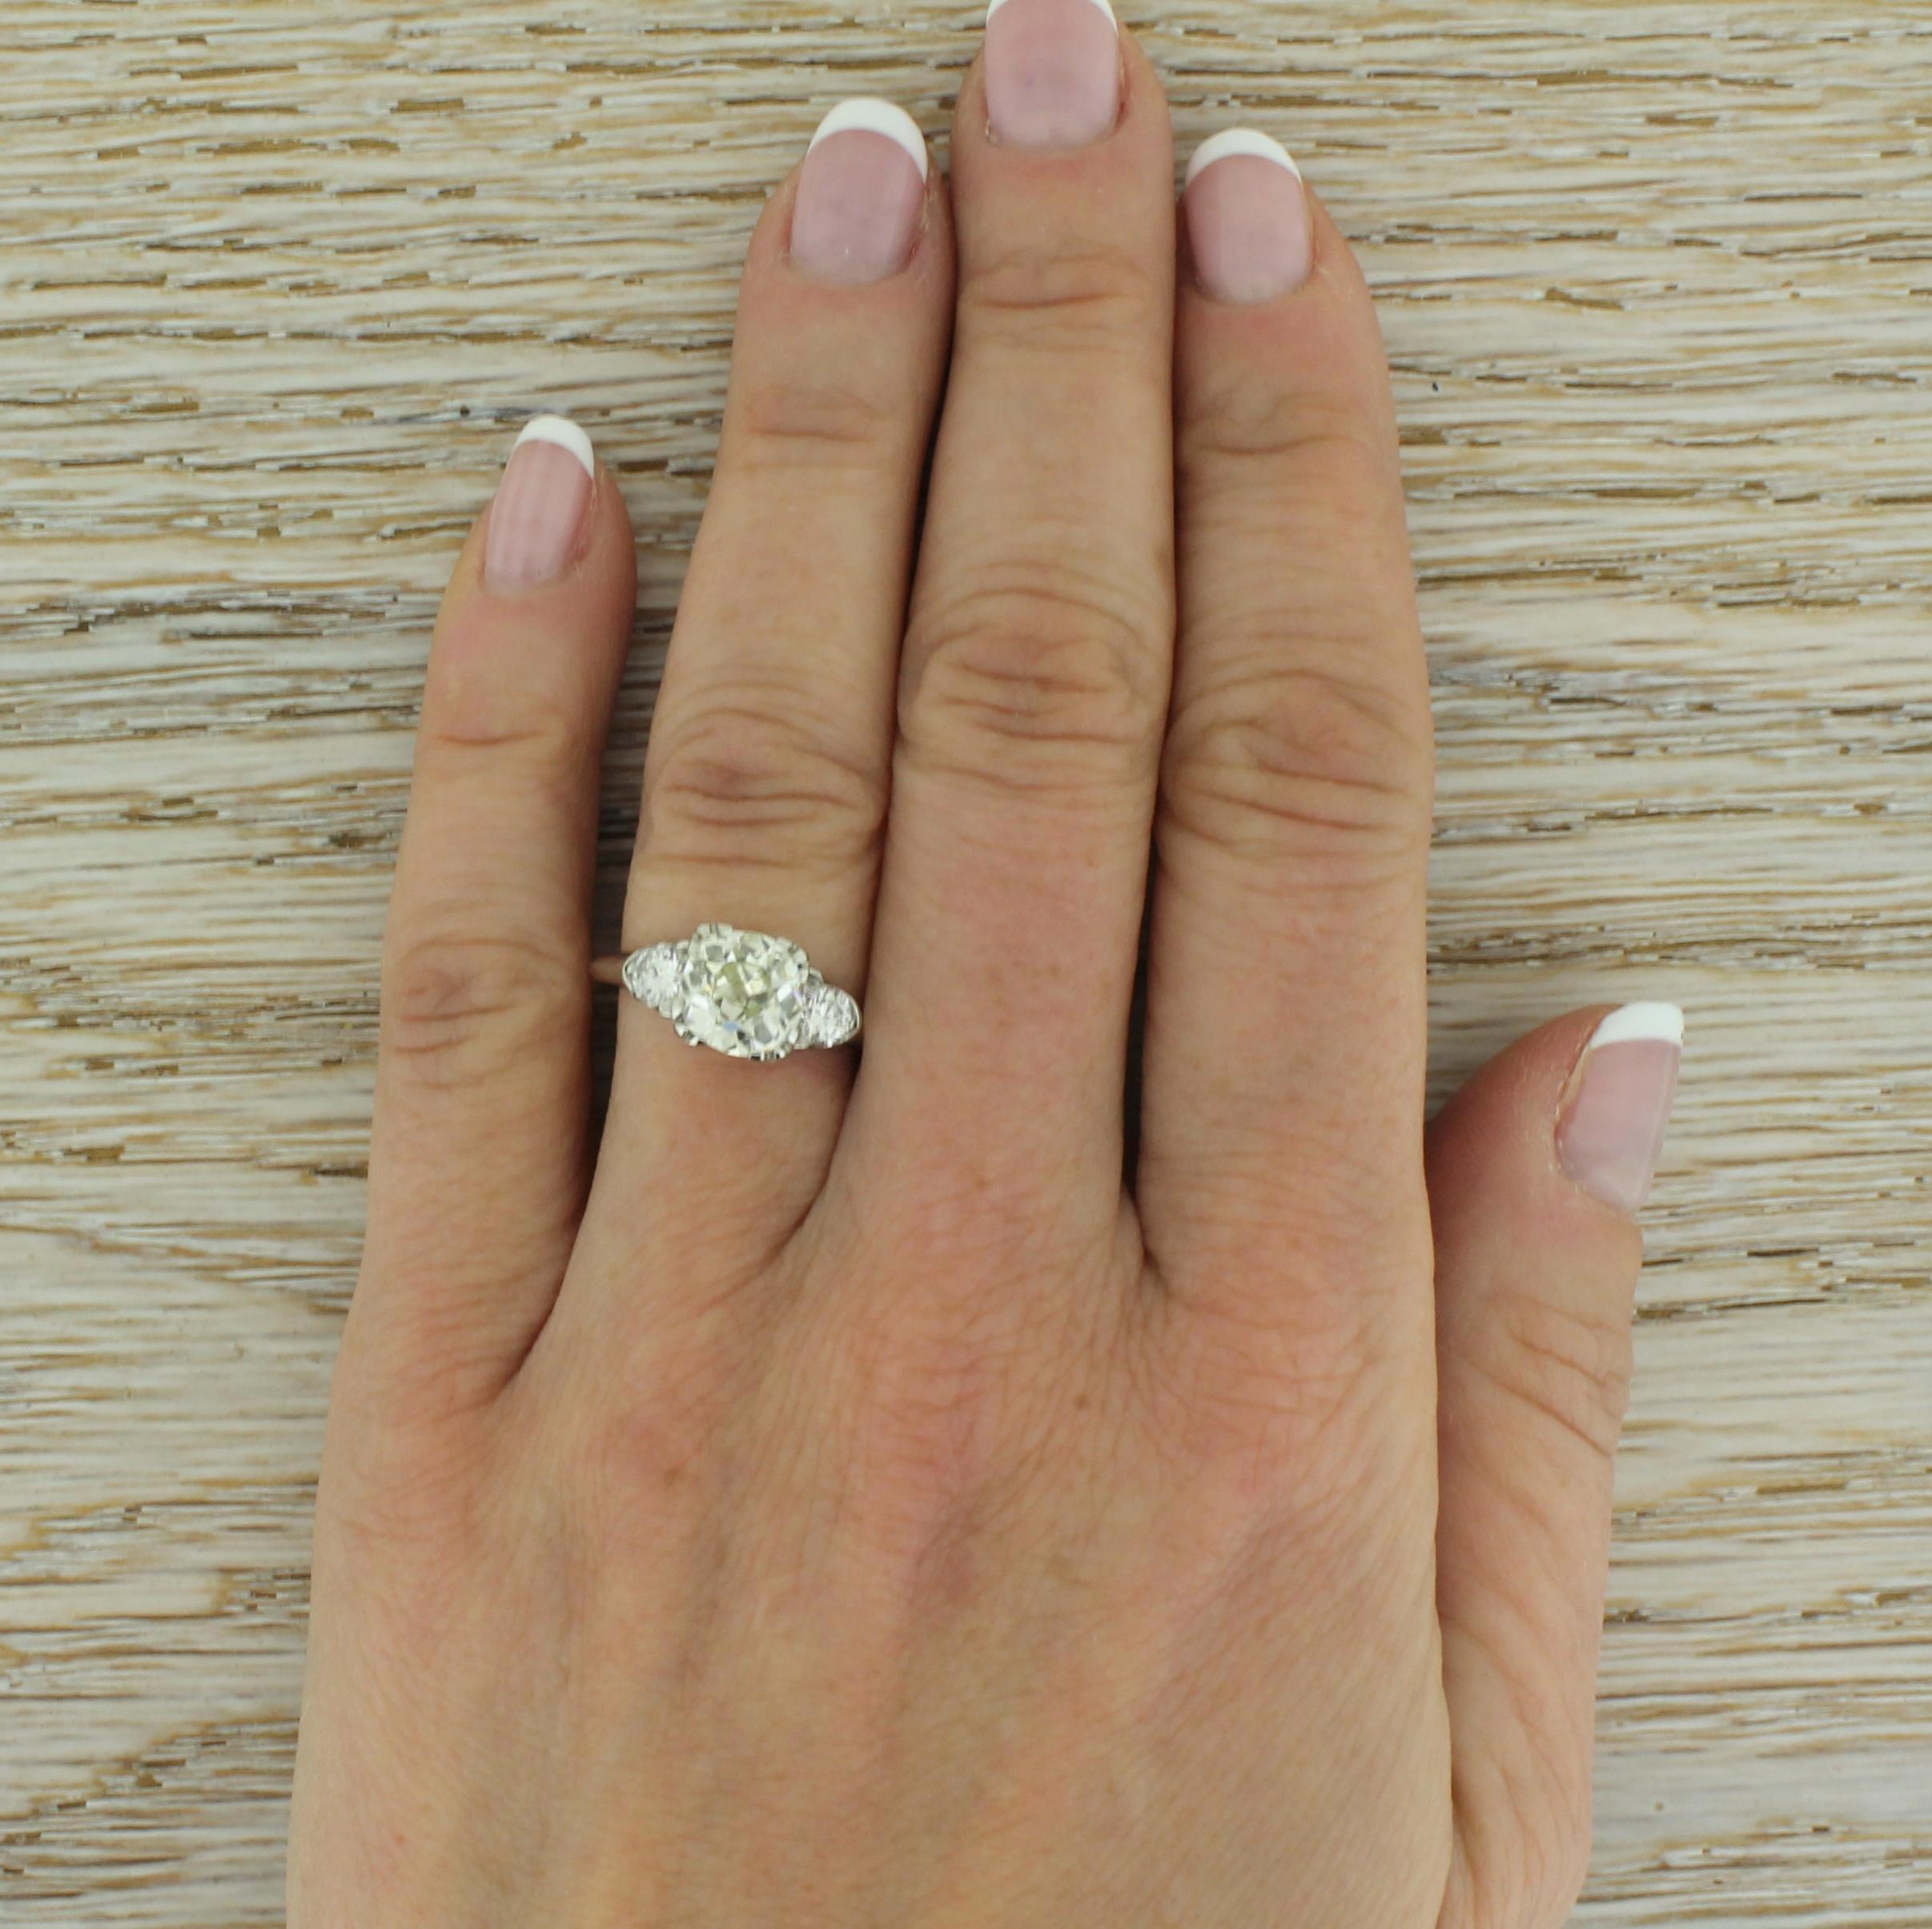 Women's Midcentury 1.85 Carat Old Cut Diamond Engagement Ring, circa 1955